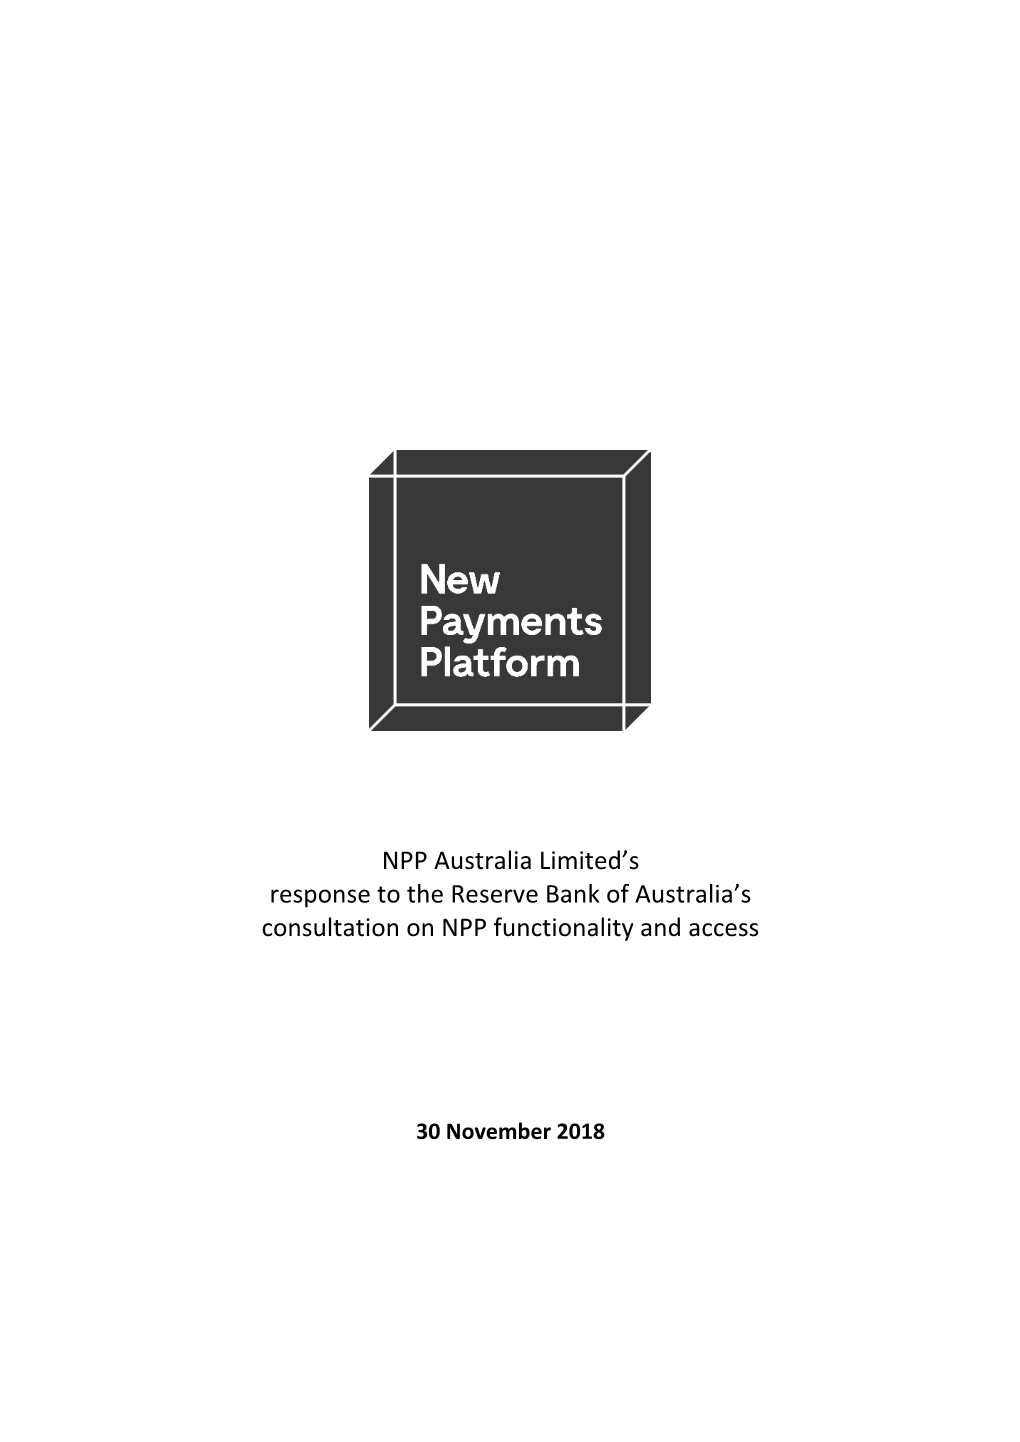 NPP Australia Limited's Response to the Reserve Bank of Australia's